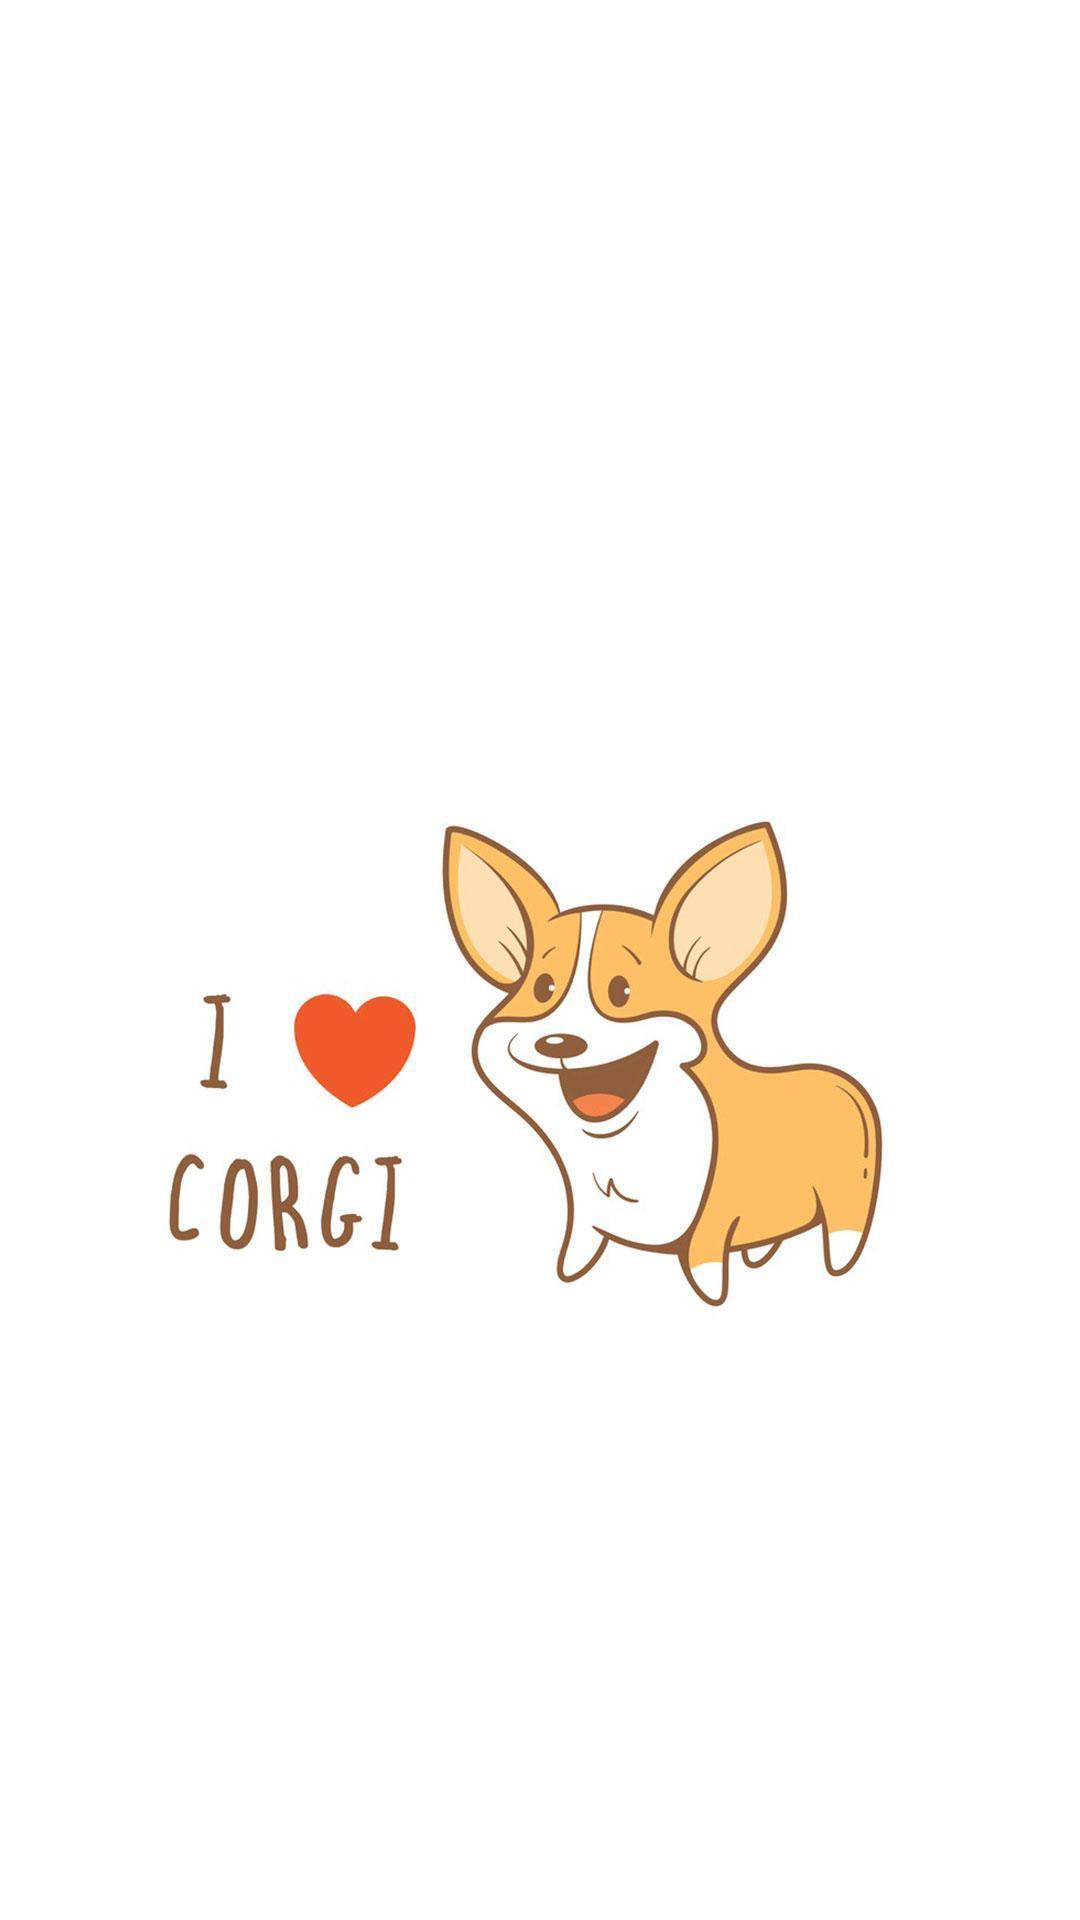 Cute Corgi Wallpaper for Android